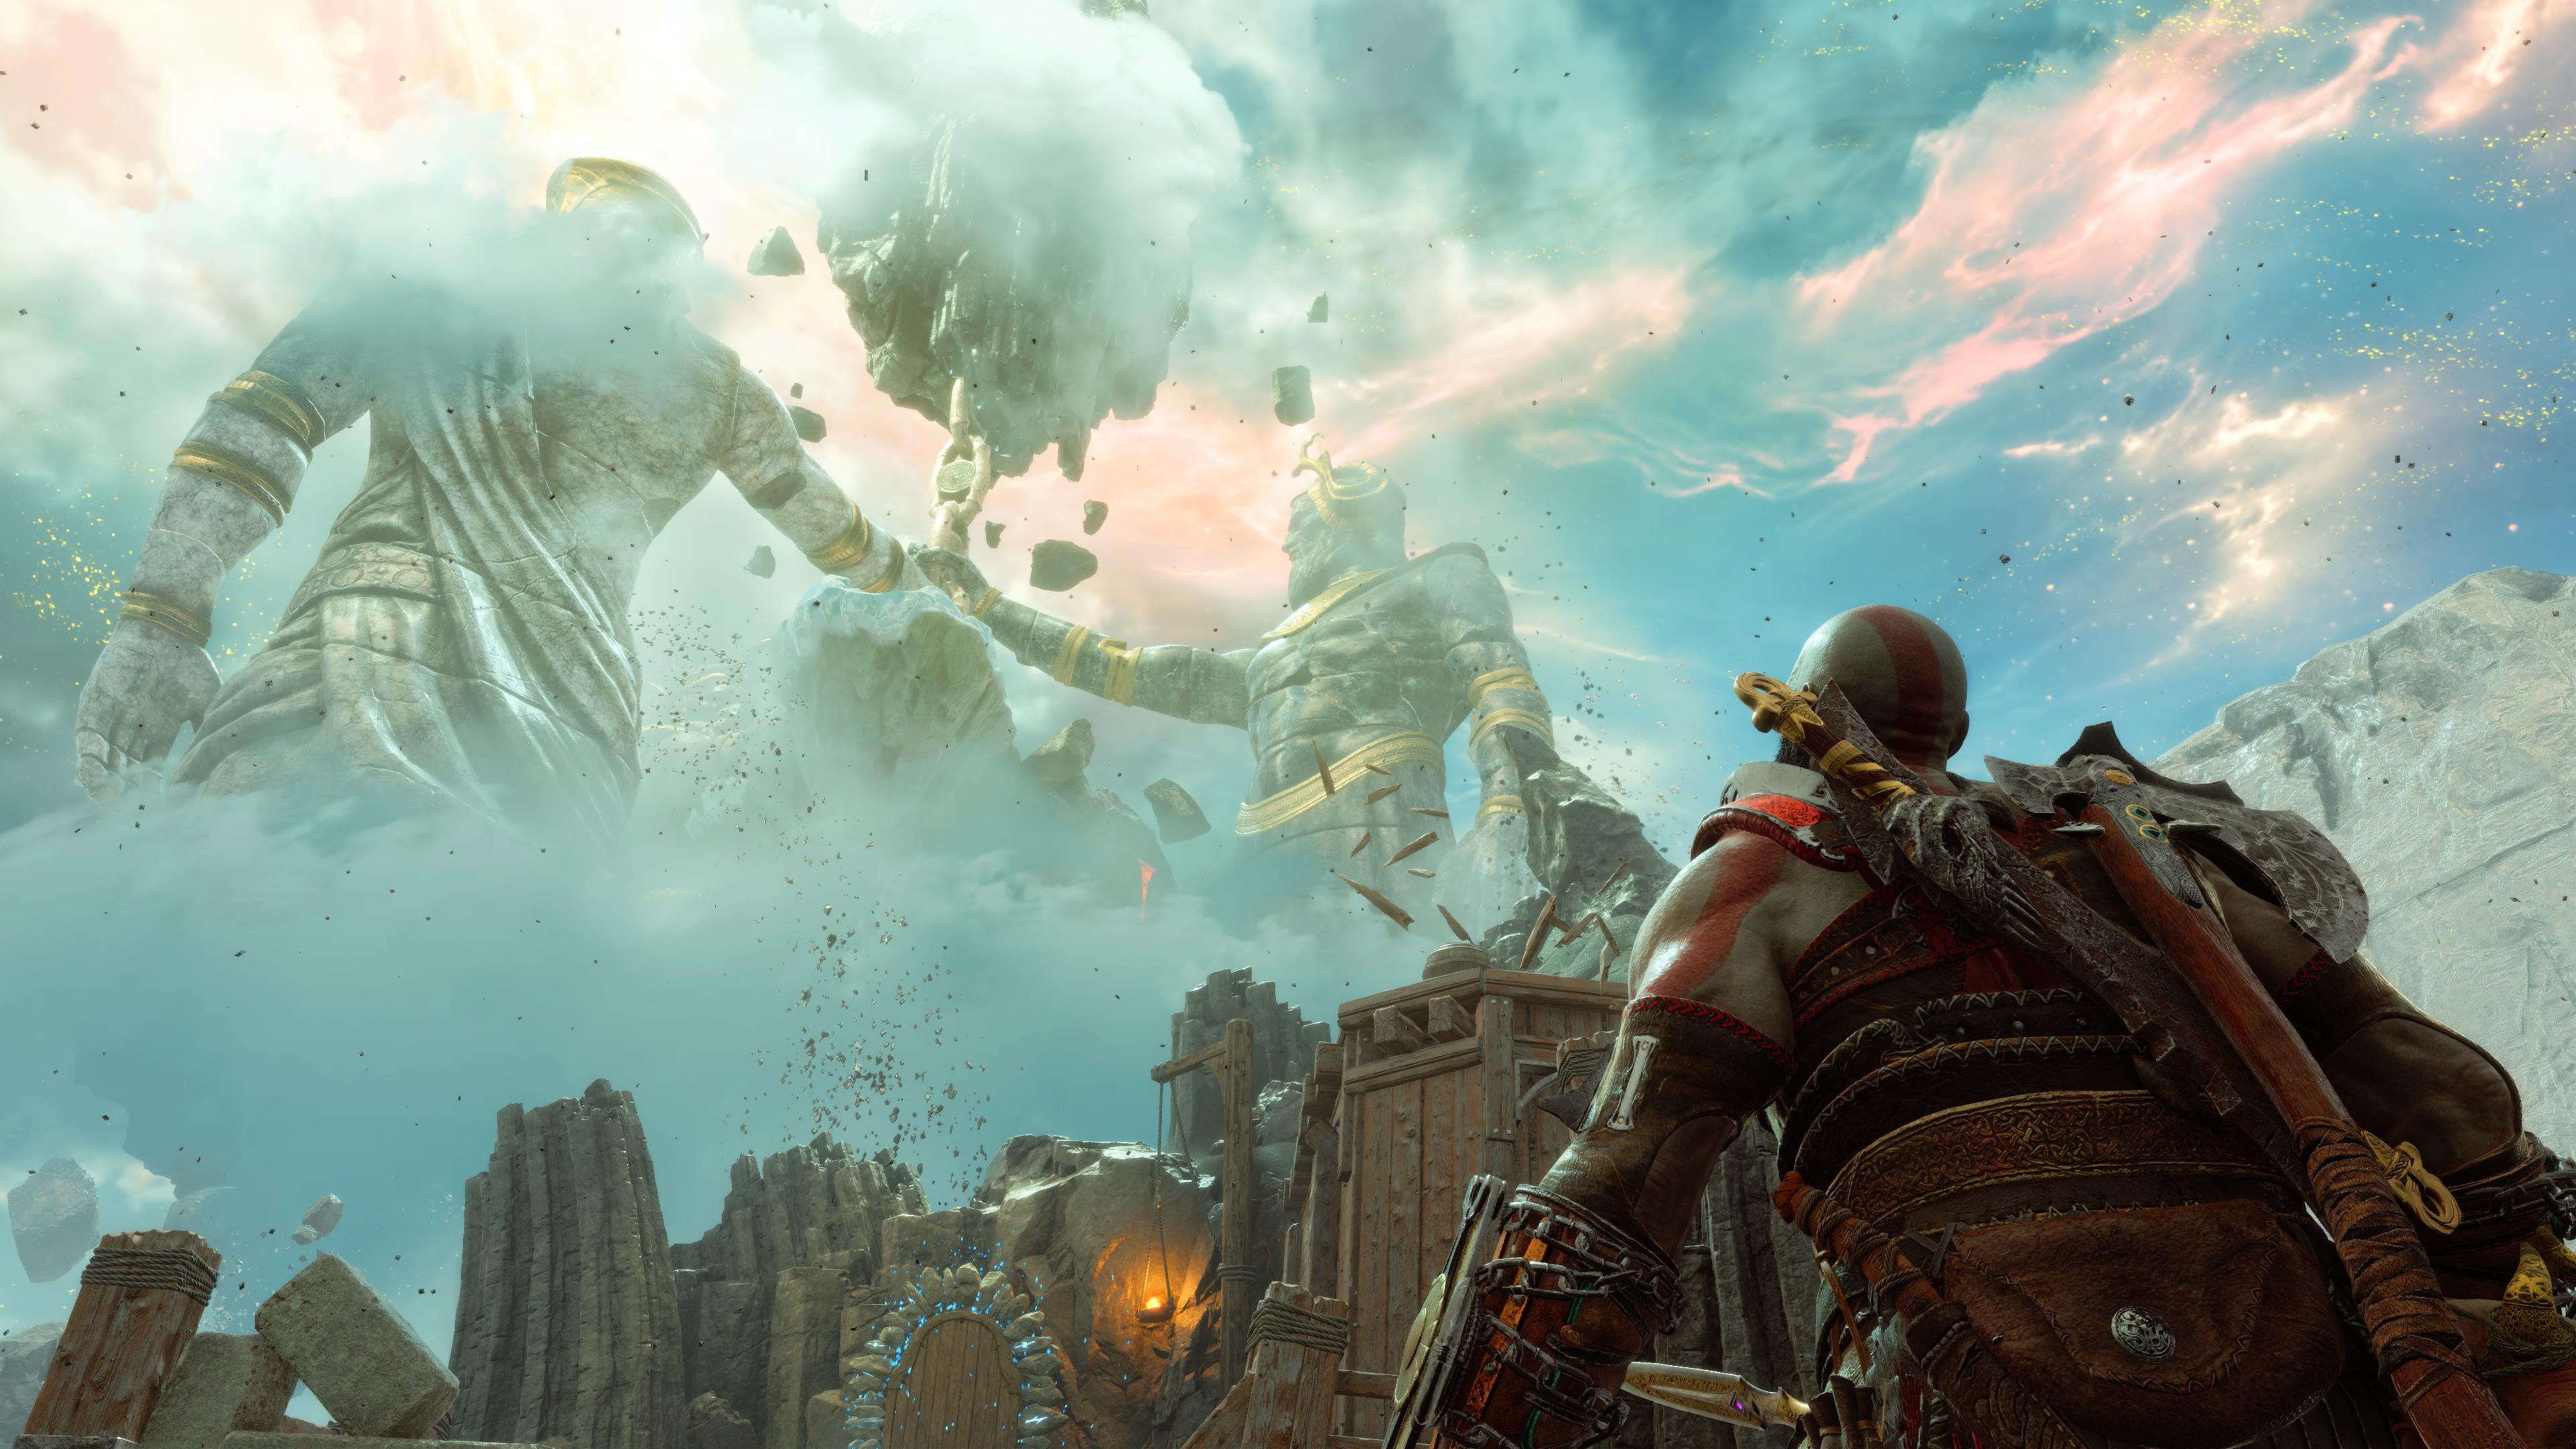 Kratos glances up at massive statues in the distance in God of War Ragnarök: Valhalla